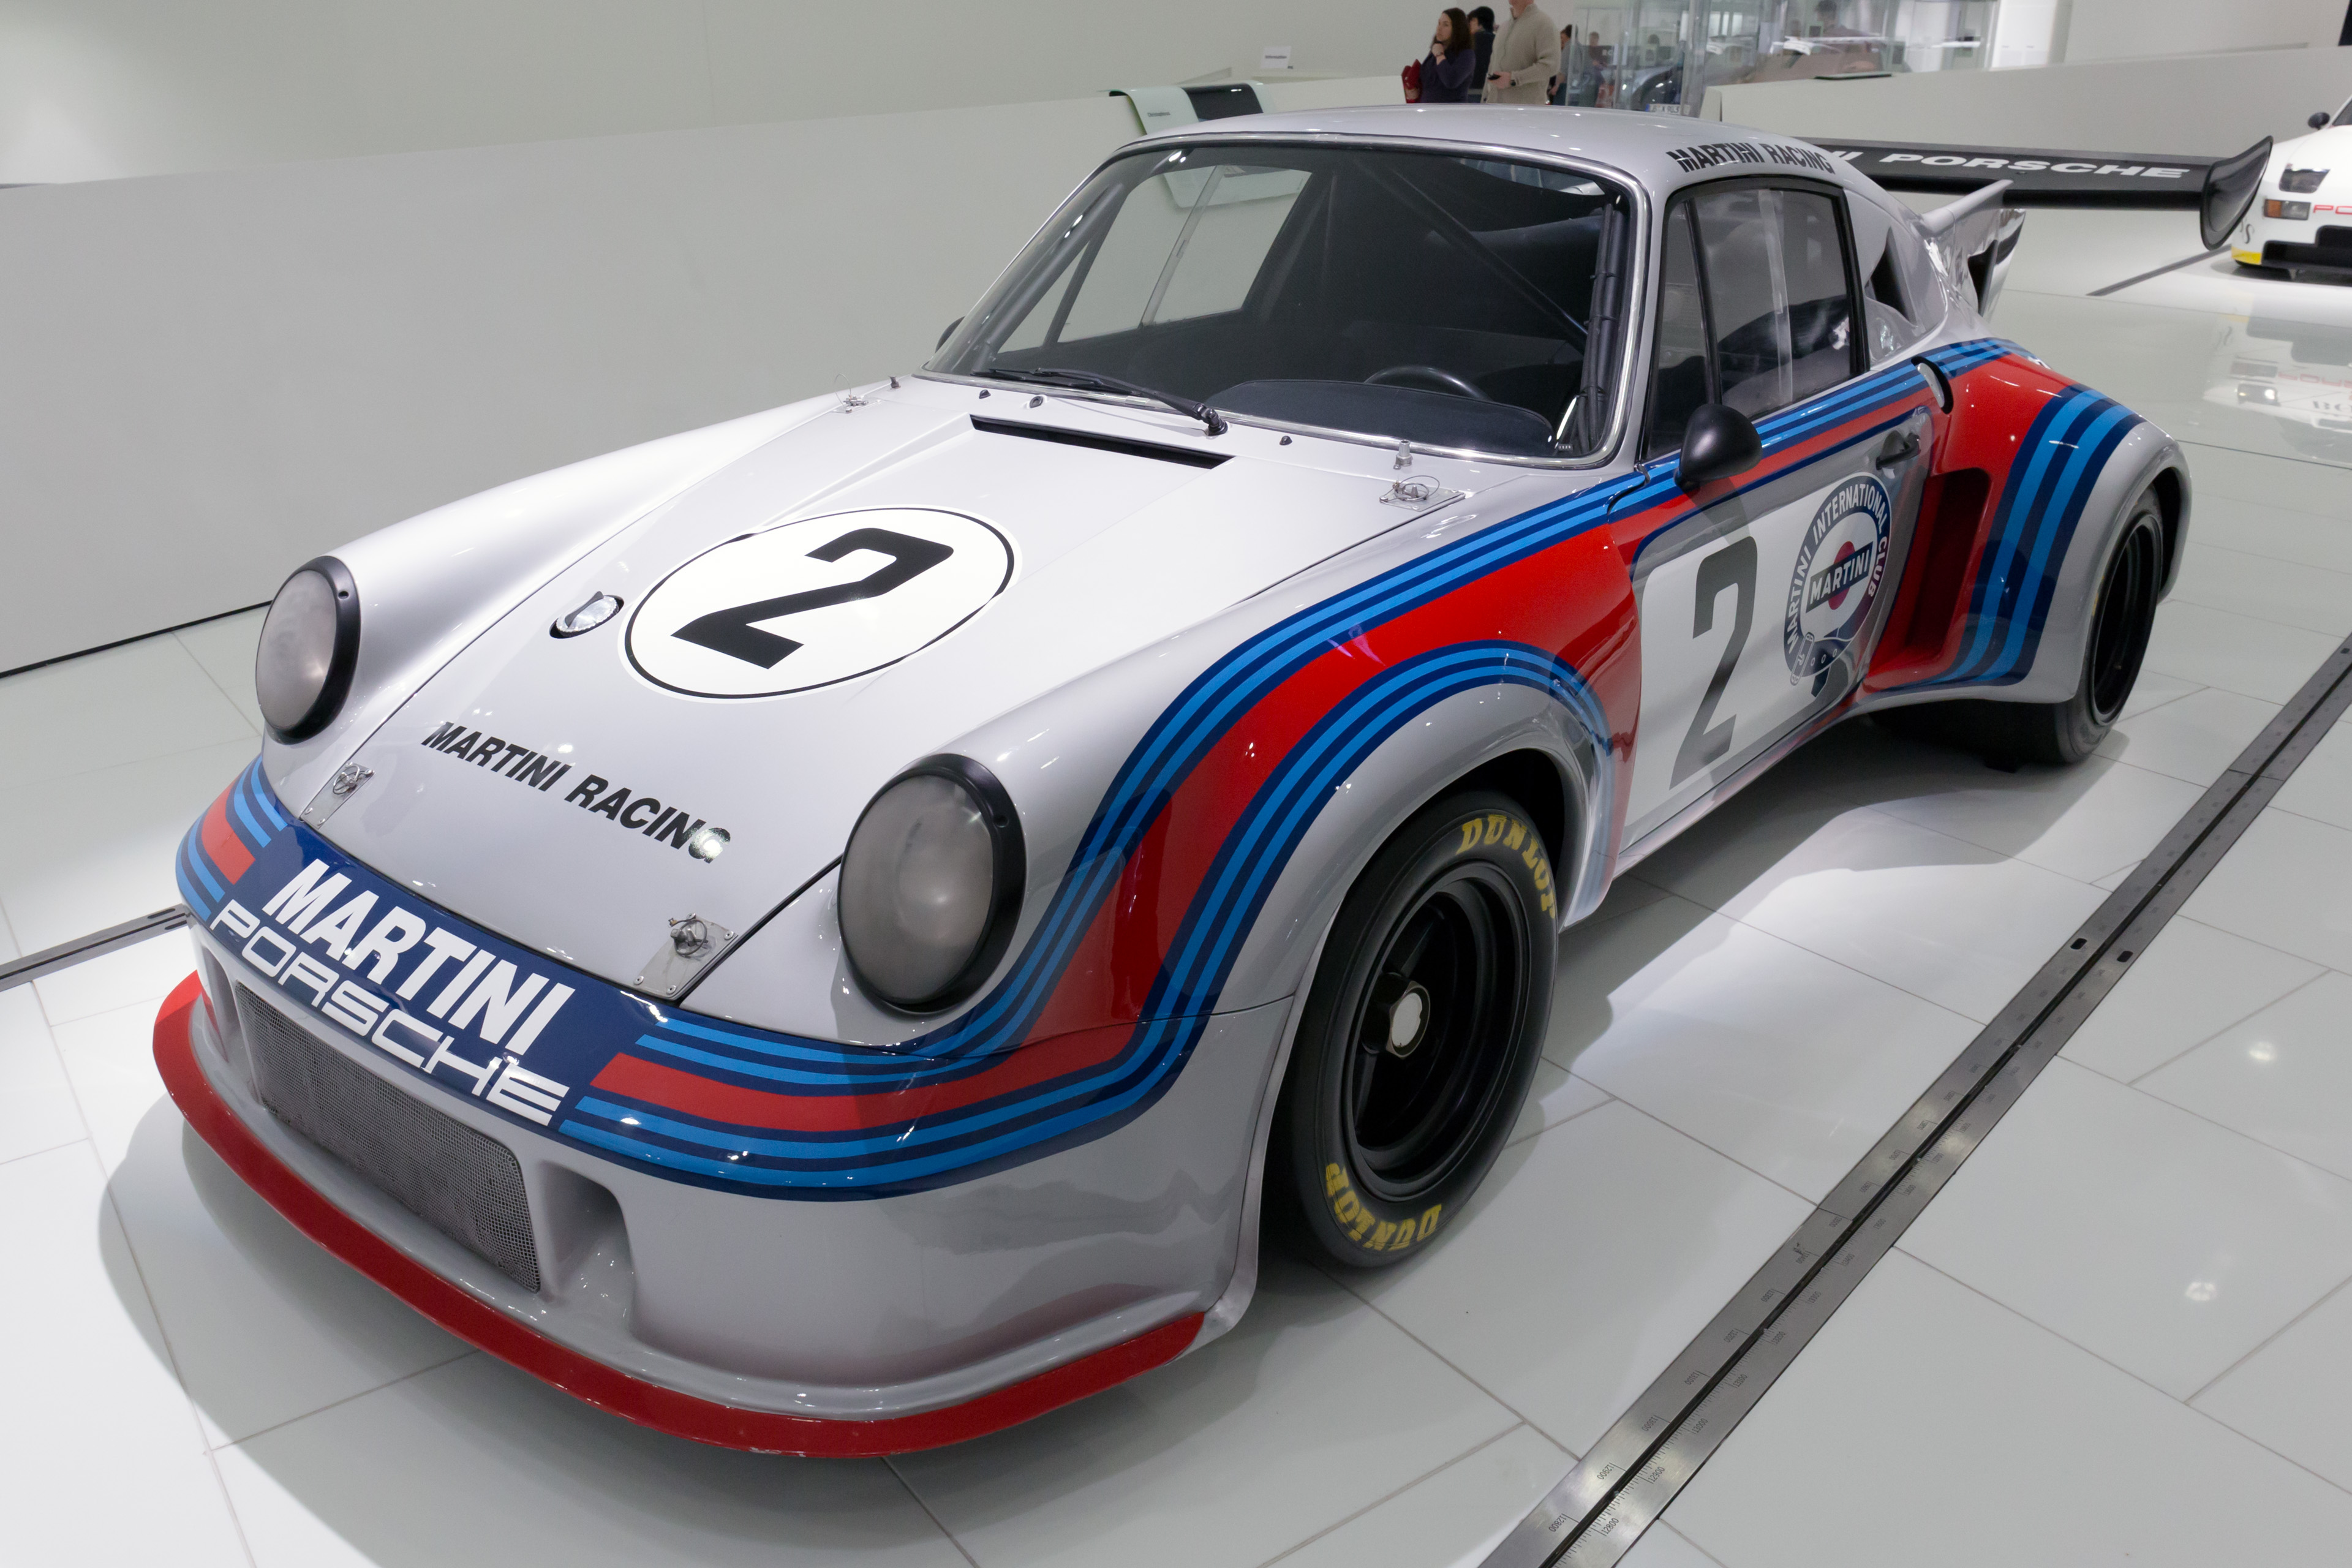 Porsche_911_RSR_Turbo_Group_5.jpg: Porsche 911 RSR Turbo